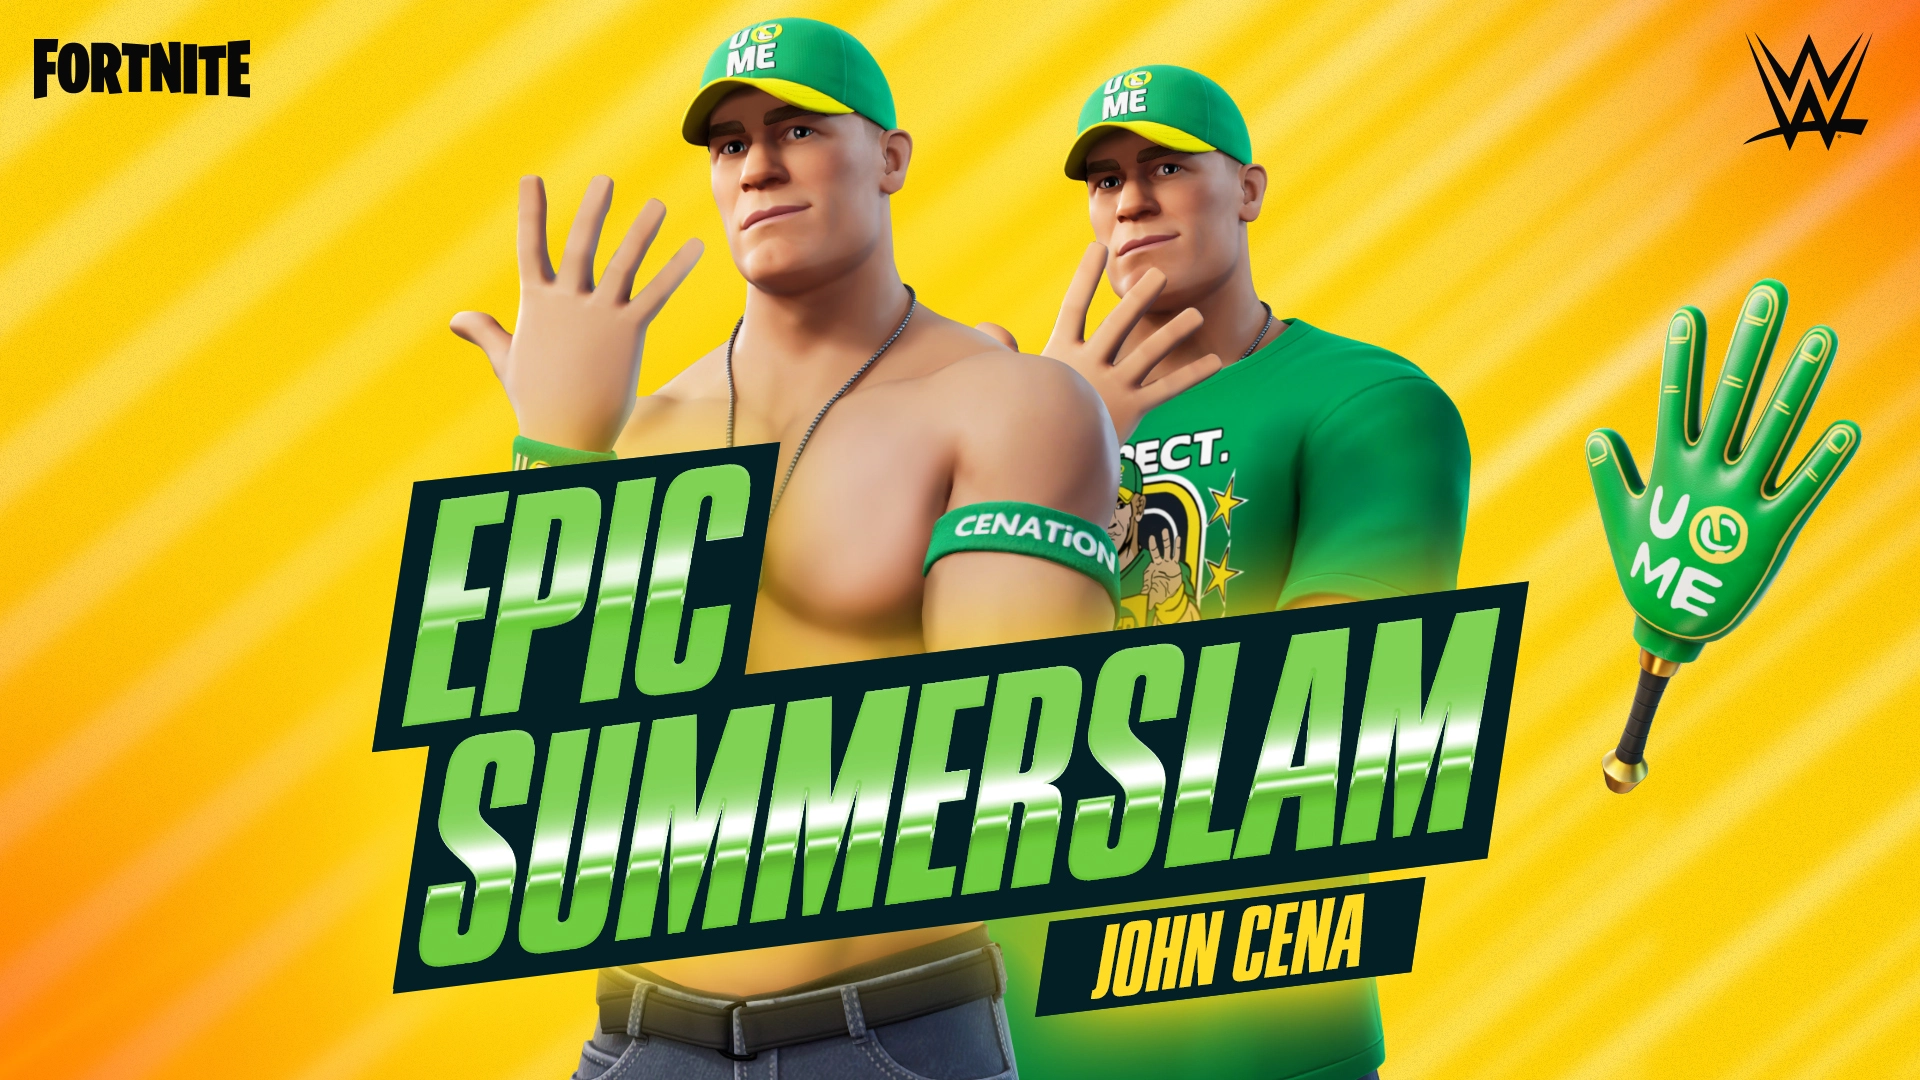 John Cena Skin May Return to Fortnite Alongside Other WWE Stars